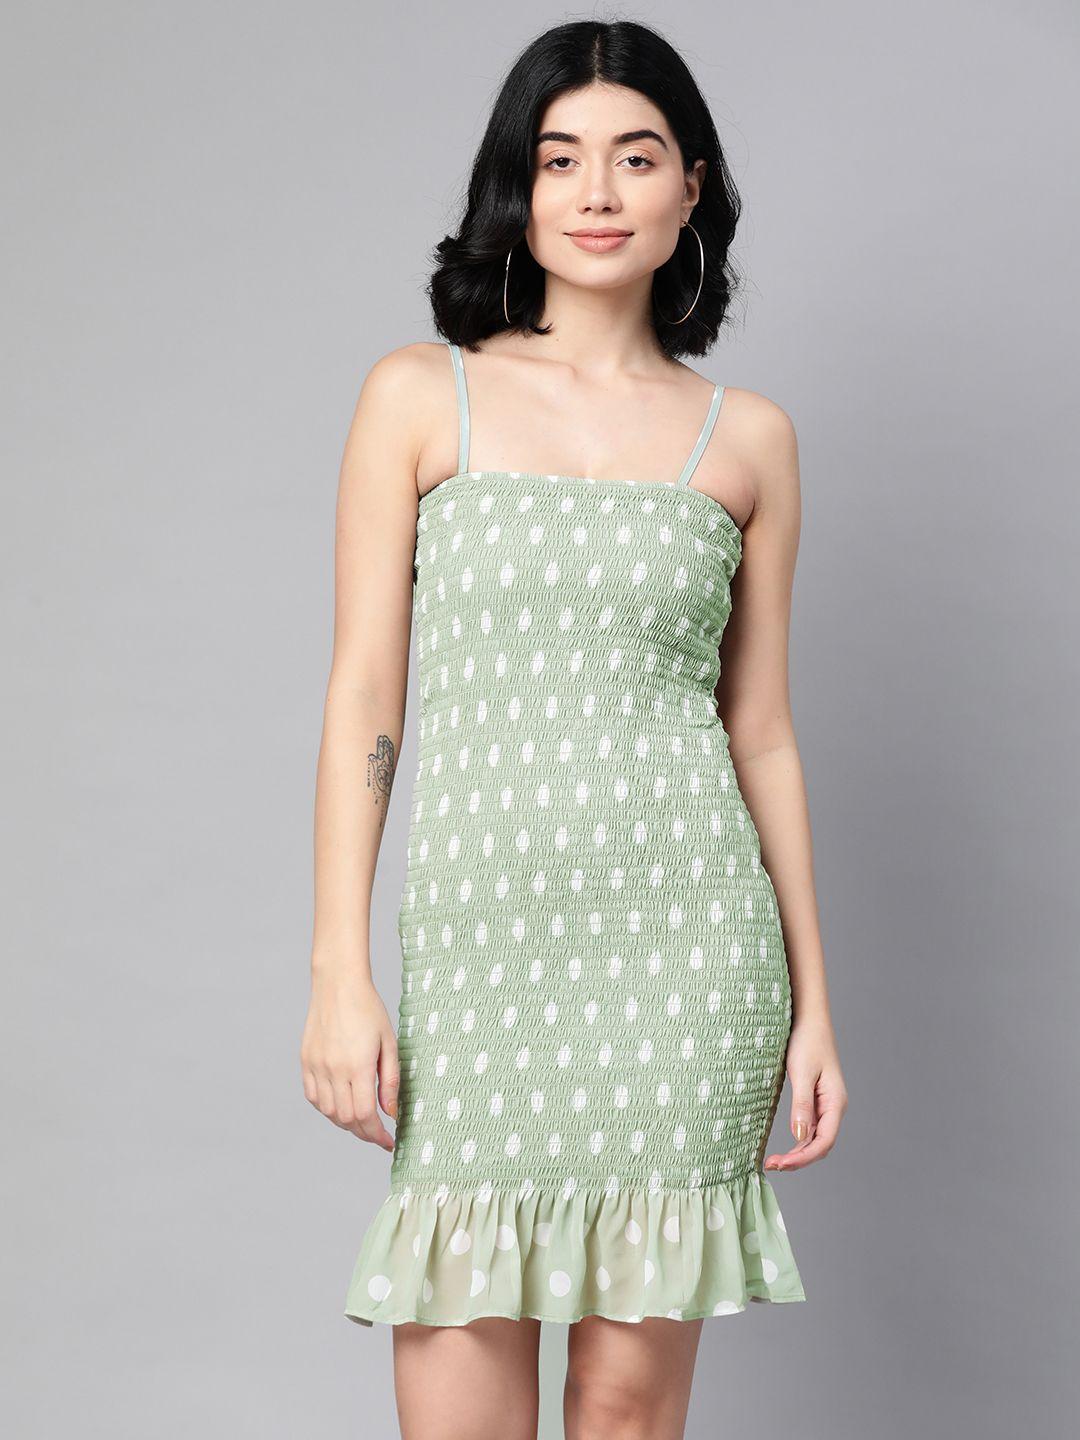 sassafras cheerful mint green and white geometric print smocked dress